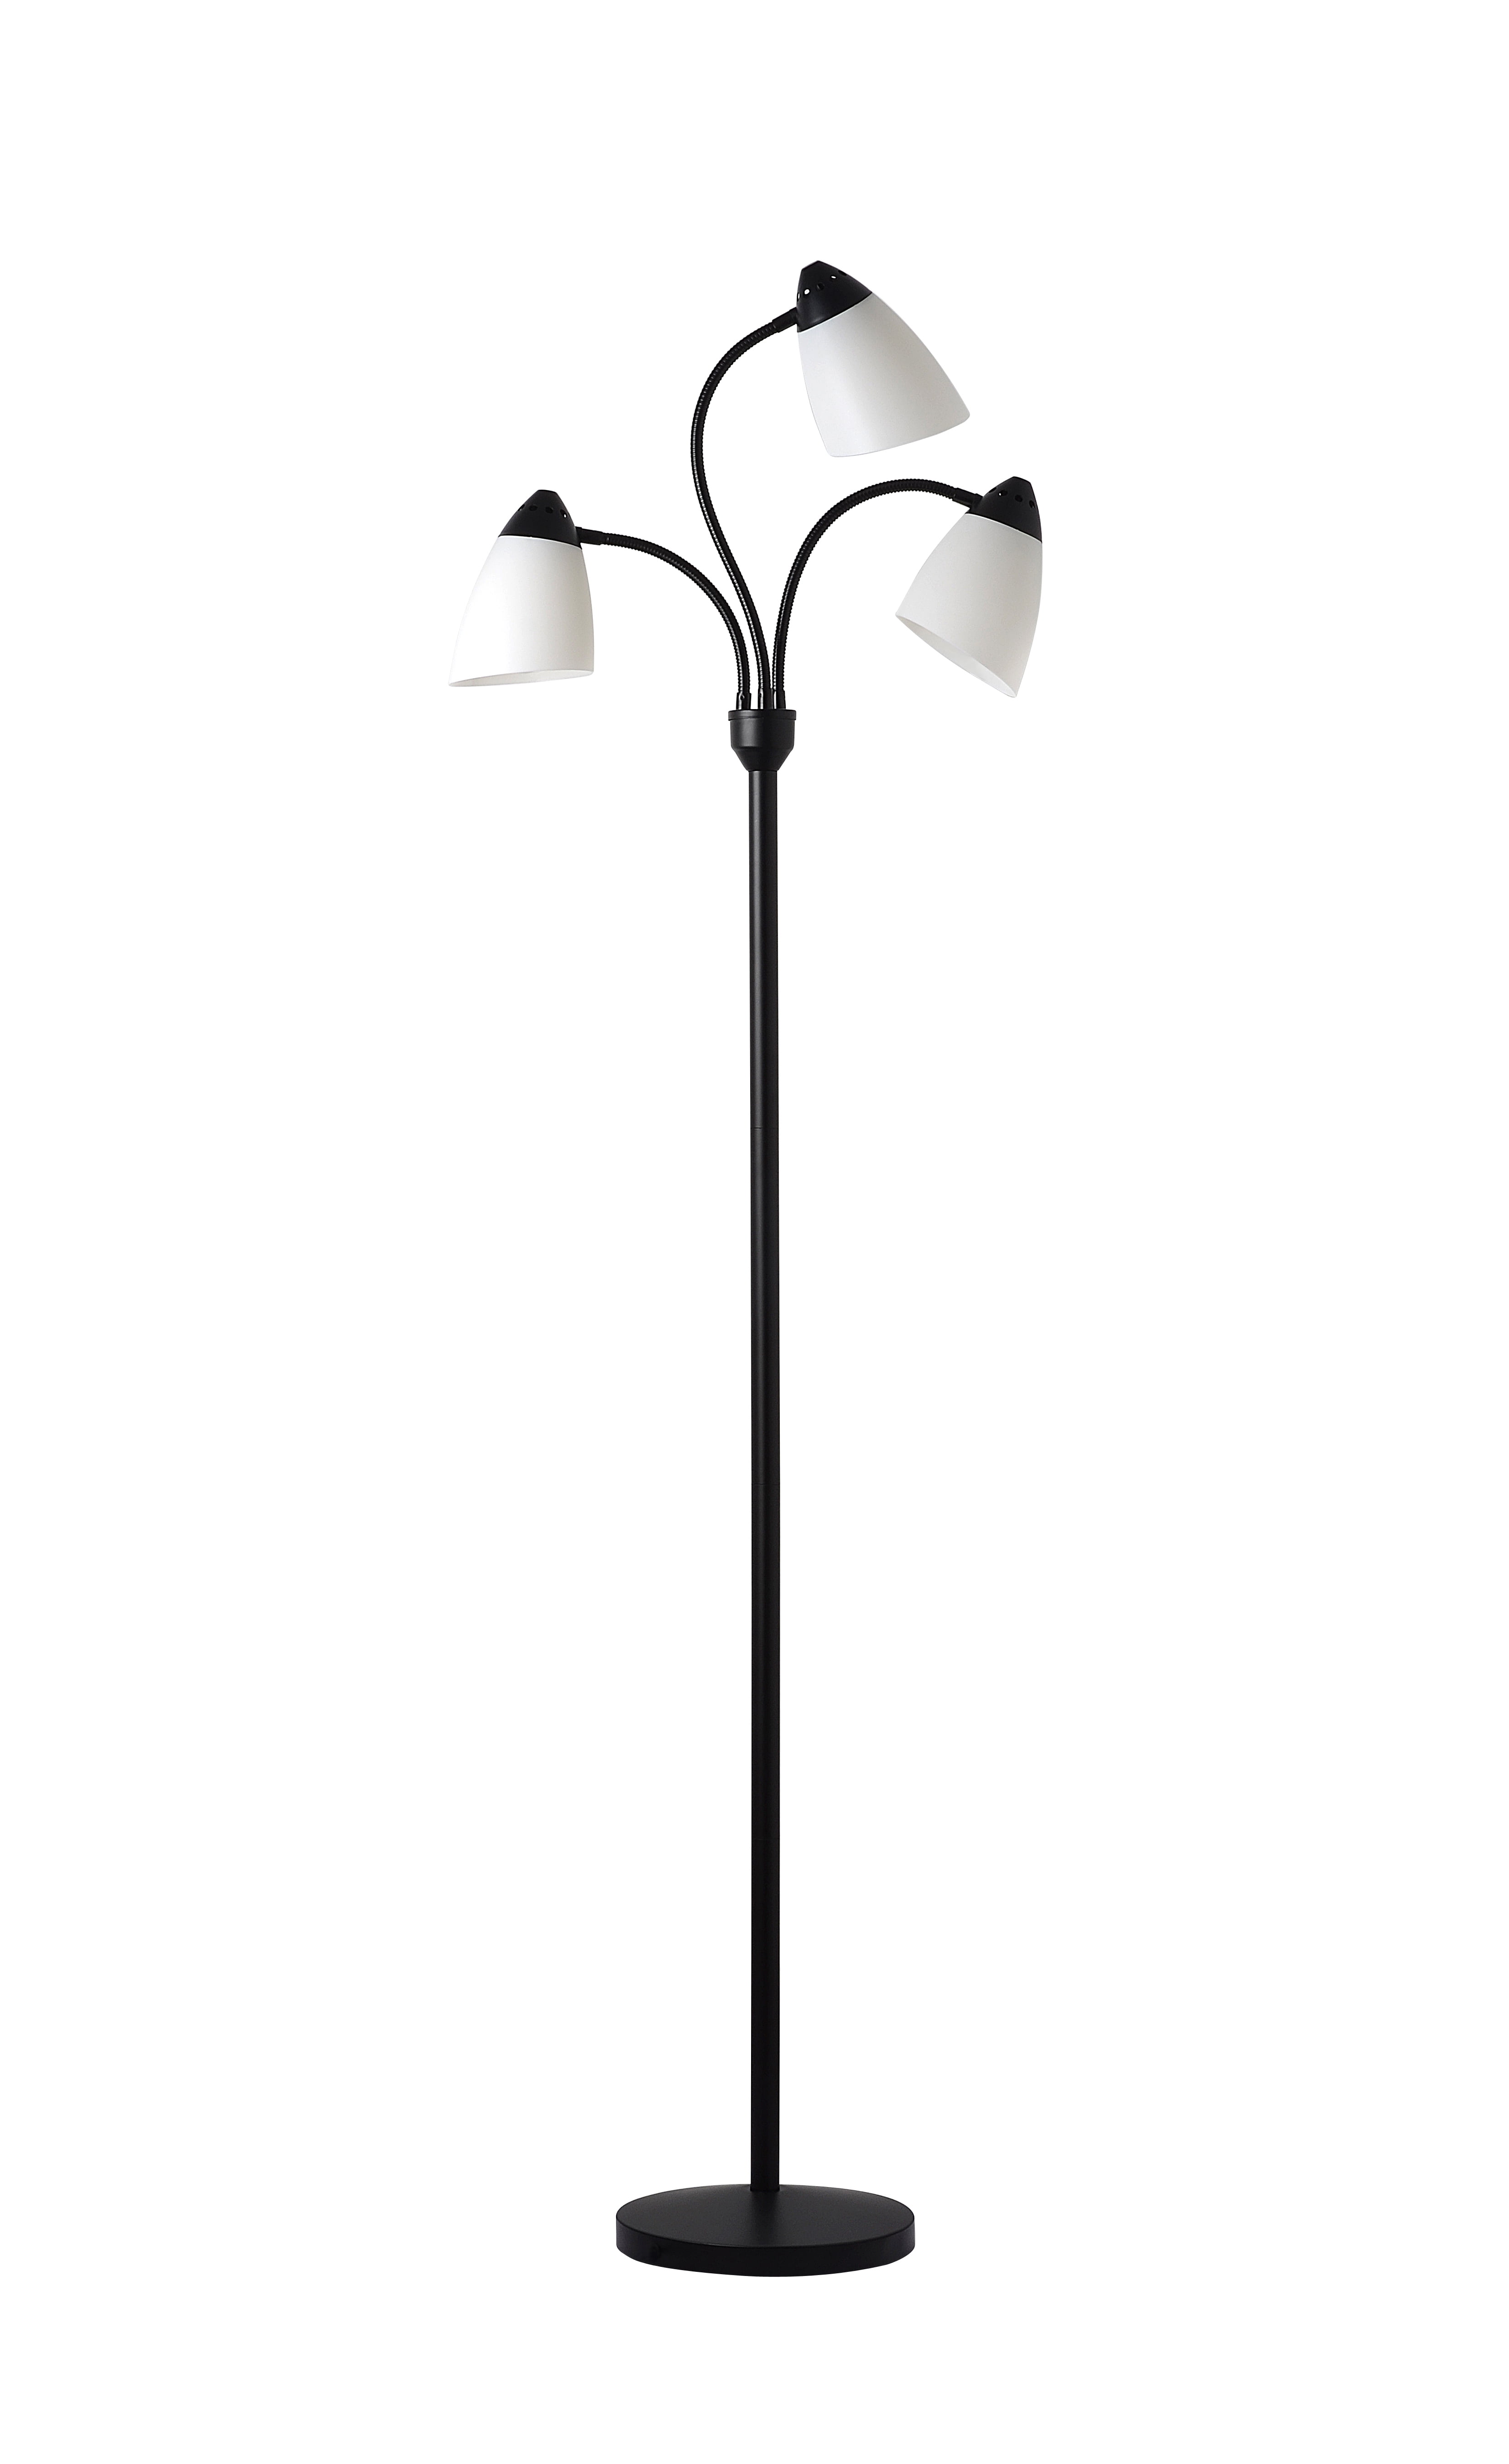 Mainstays 3 Head Floor Lamp Black With, Mainstays Floor Lamp Replacement Plastic Shade